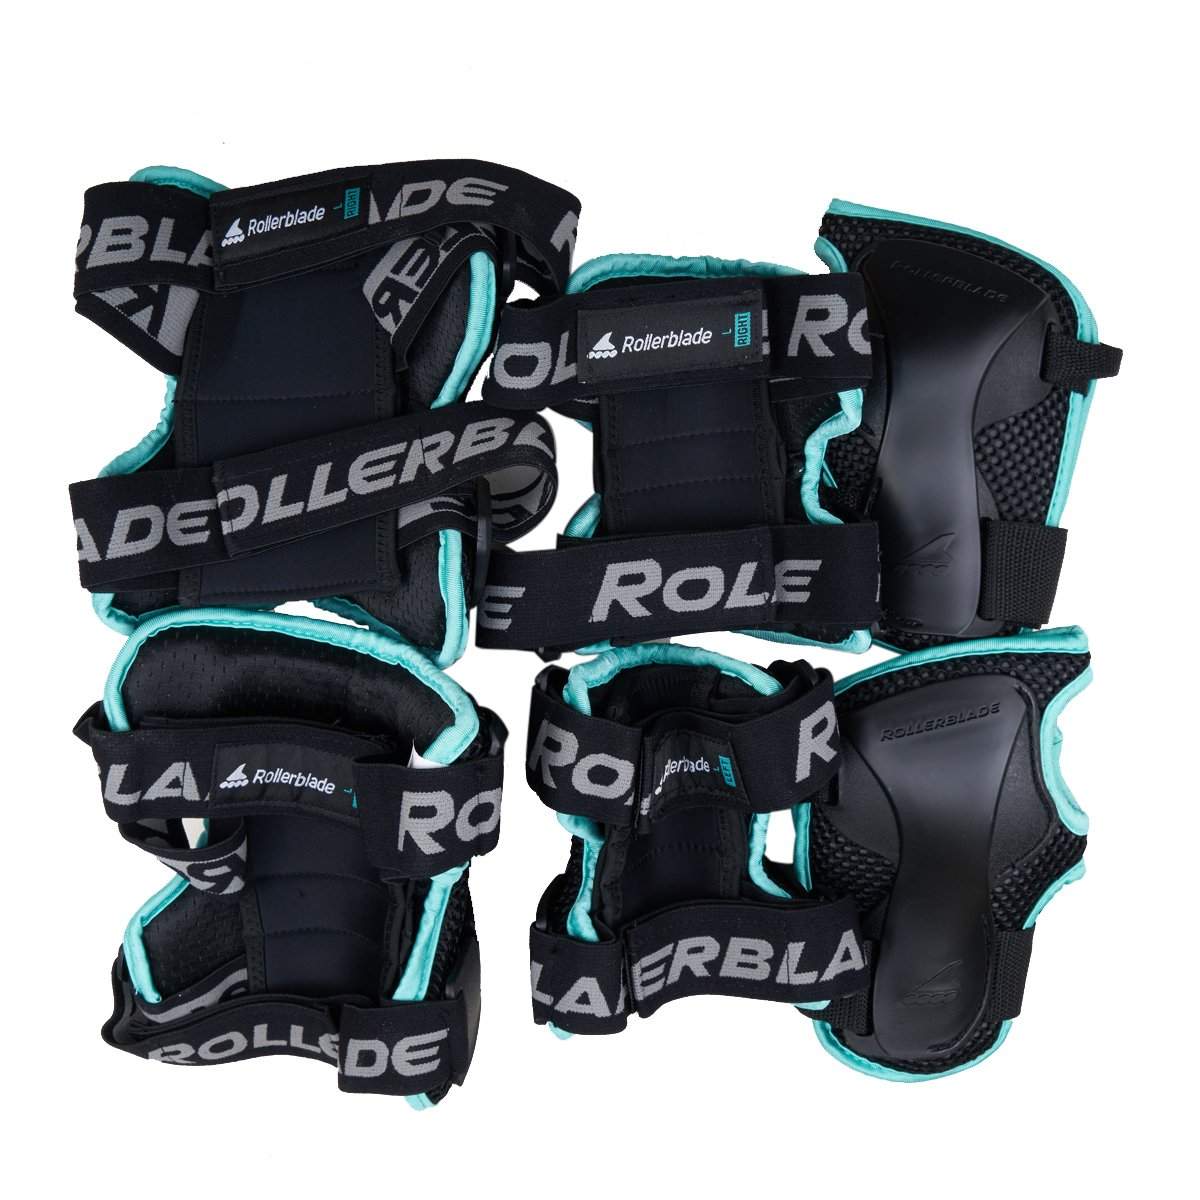 Rollerblade X Gear W 3 pack pad set - Black / Teal-Rollerblade-Aggressive Skate,black,blue,Pad sets,Protective Gear